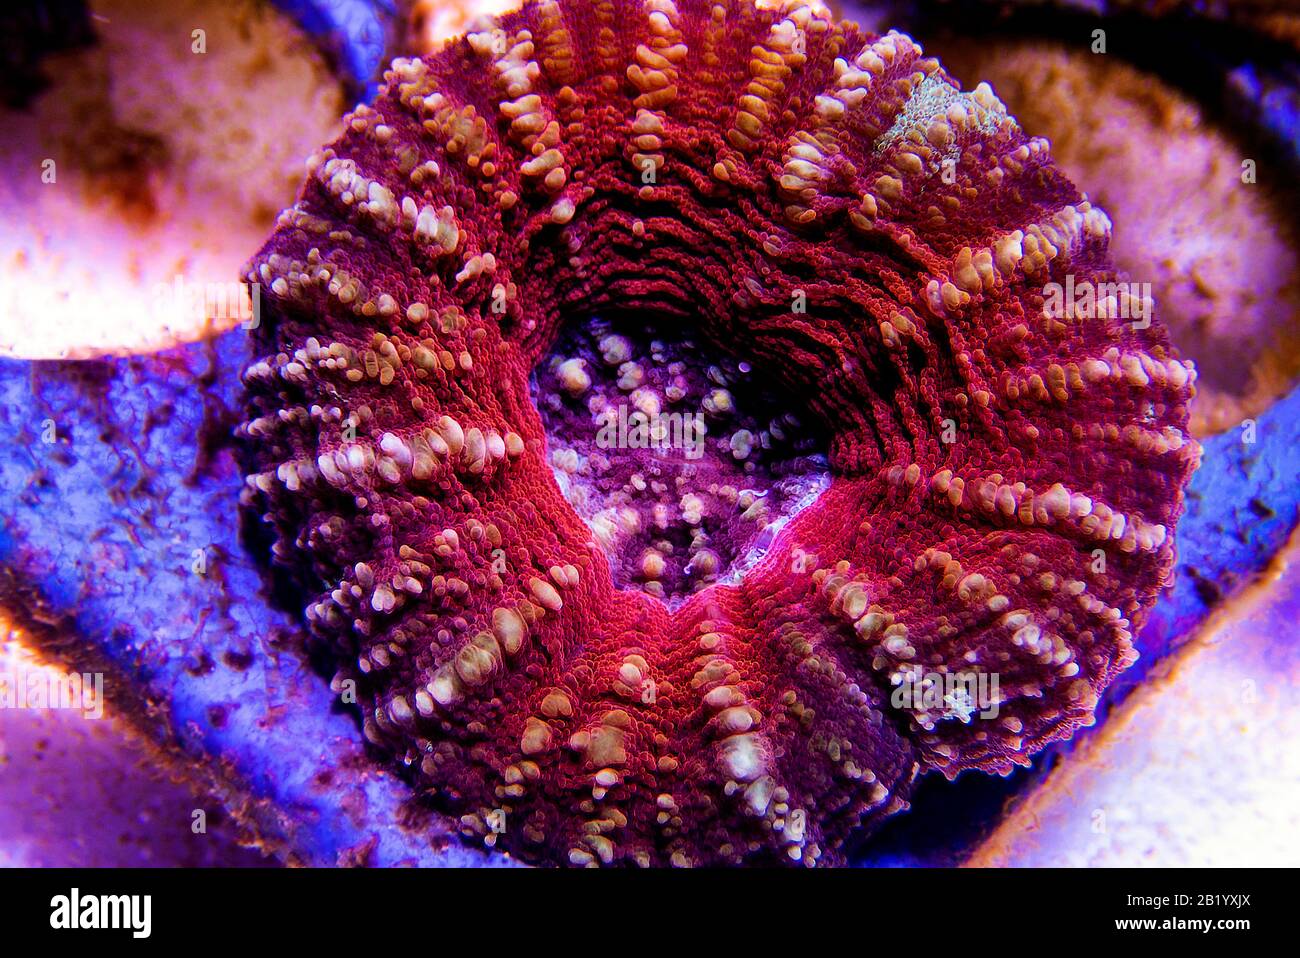 Scolymia wellsii LPS coral on black background Stock Photo